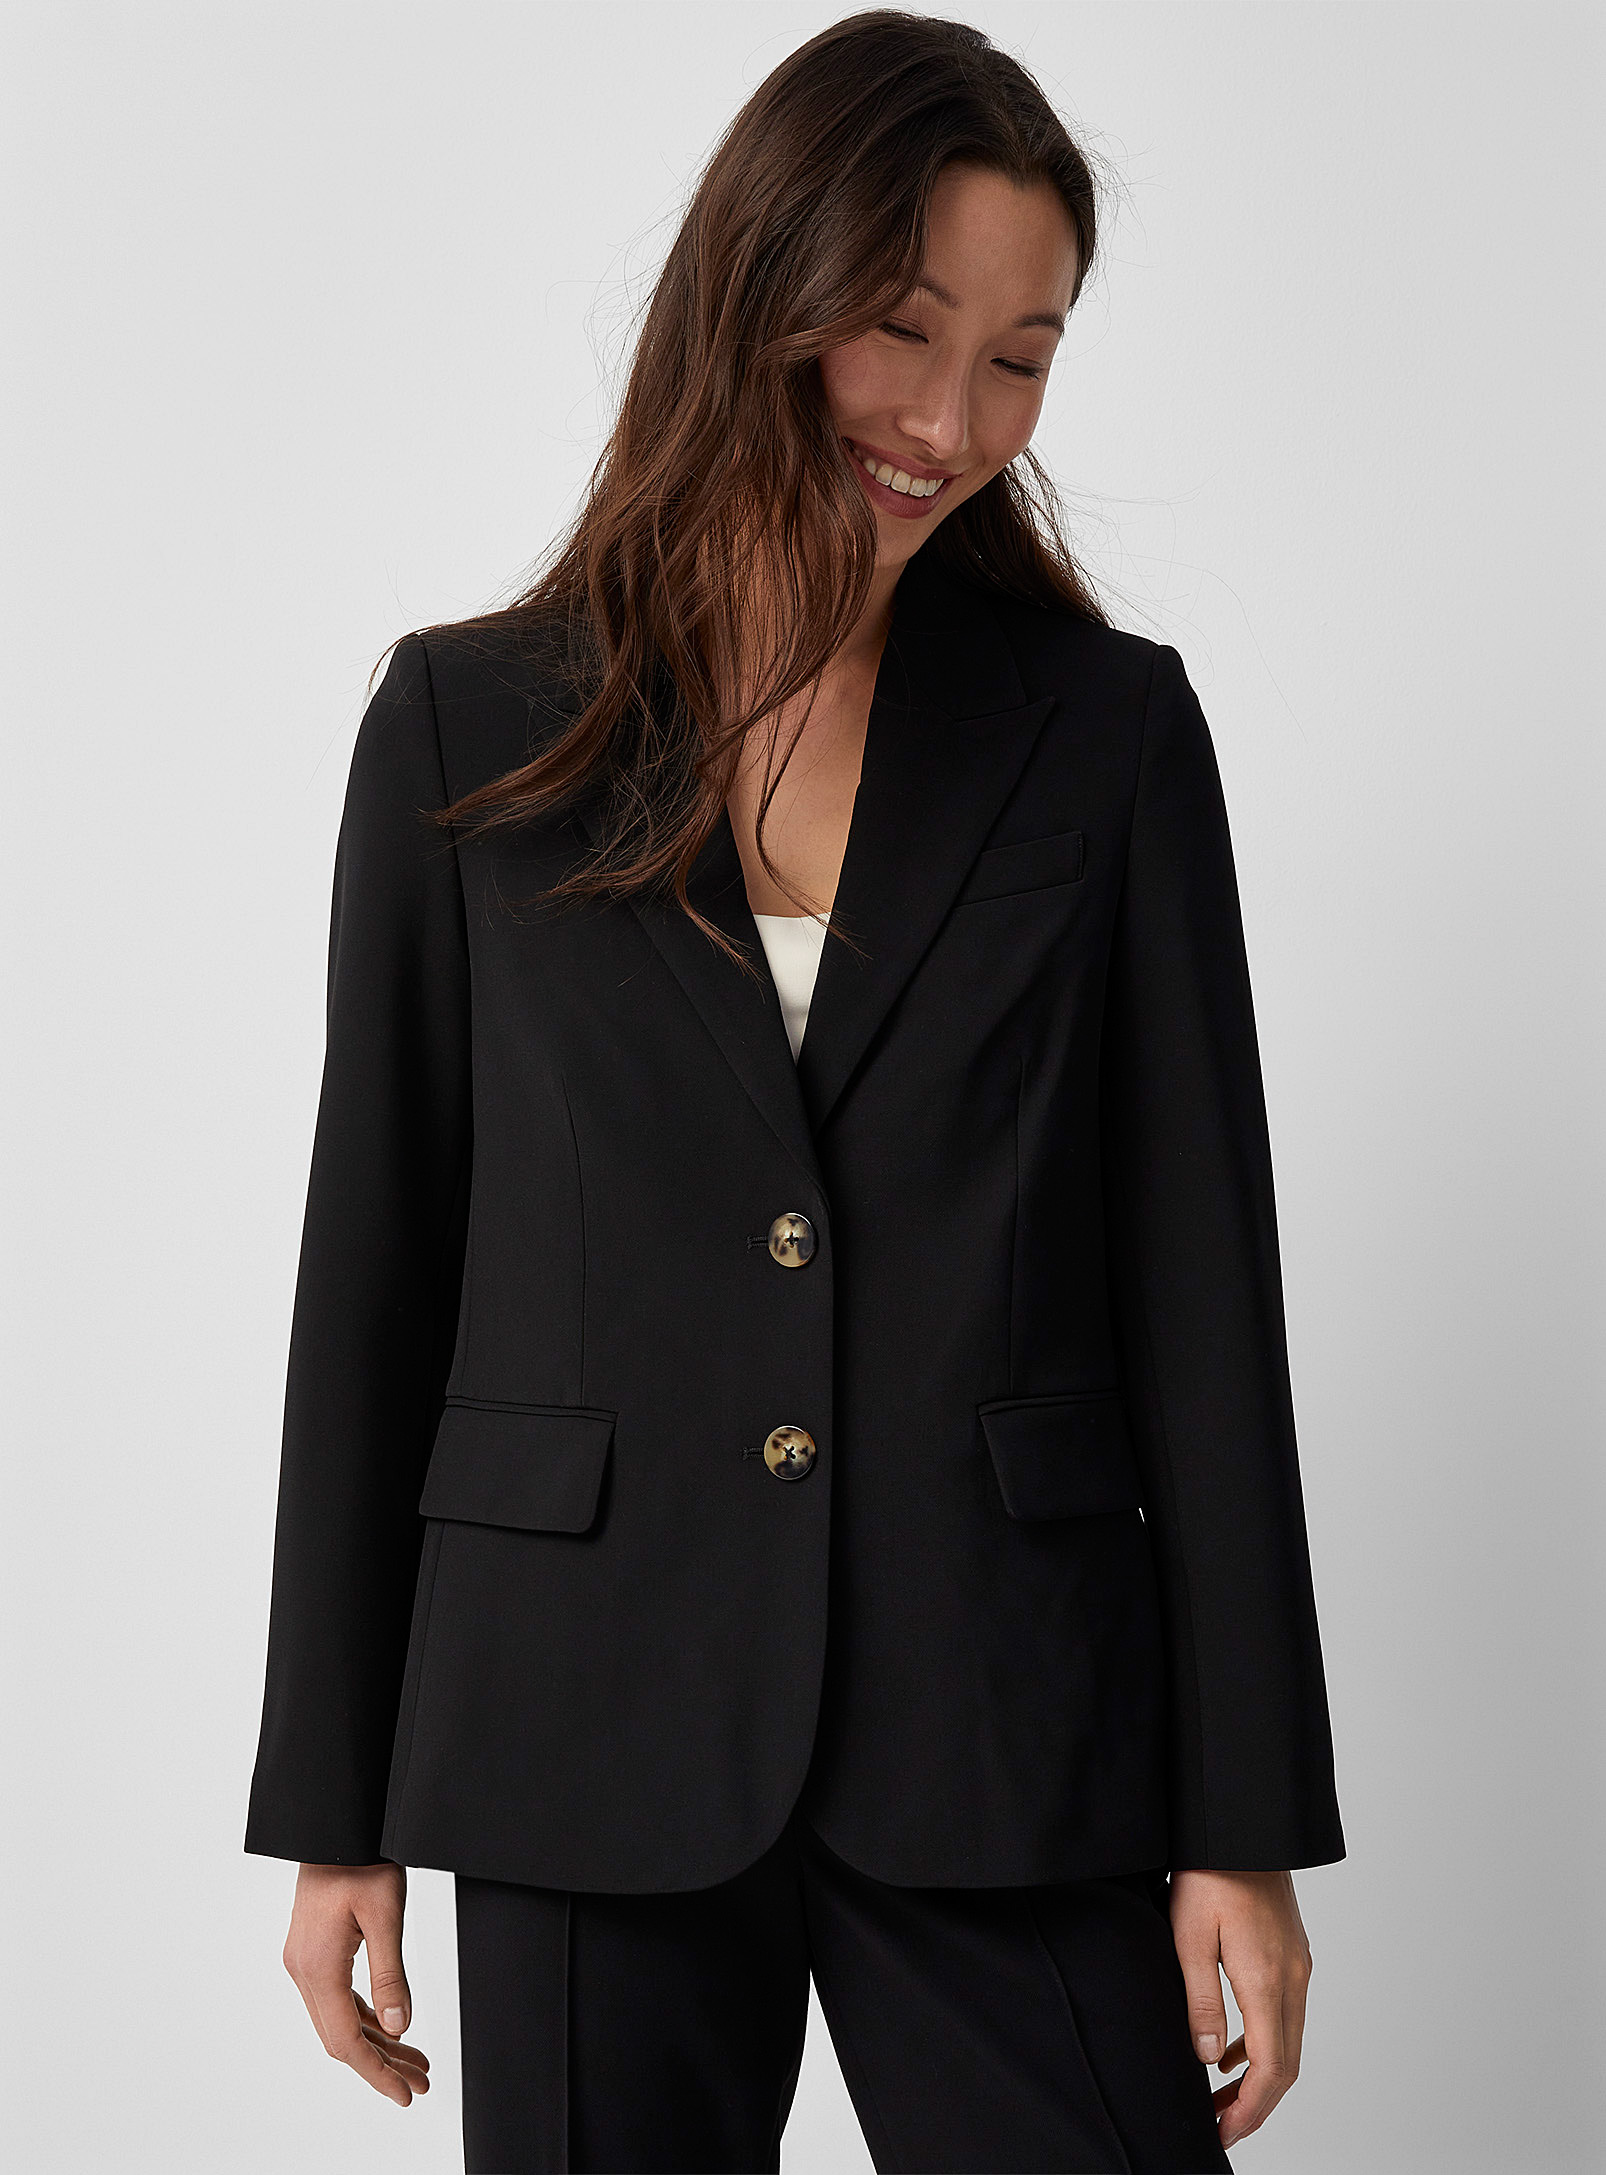 Contemporaine - Women's Tailored crepe two-button Blazer Jacket